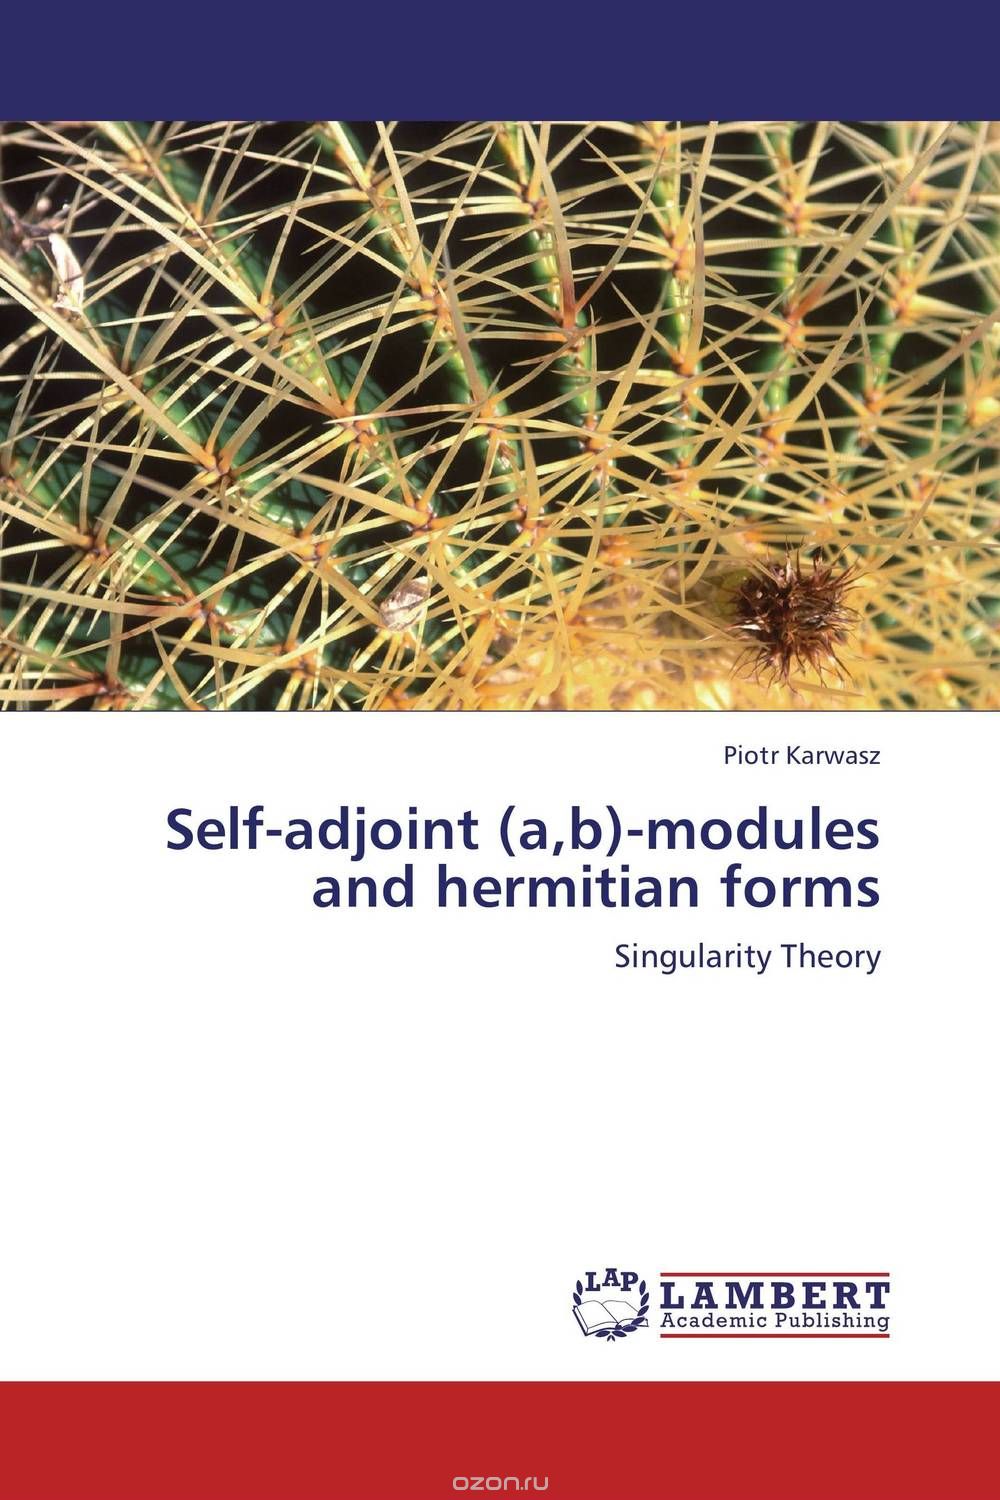 Скачать книгу "Self-adjoint (a,b)-modules and hermitian forms"